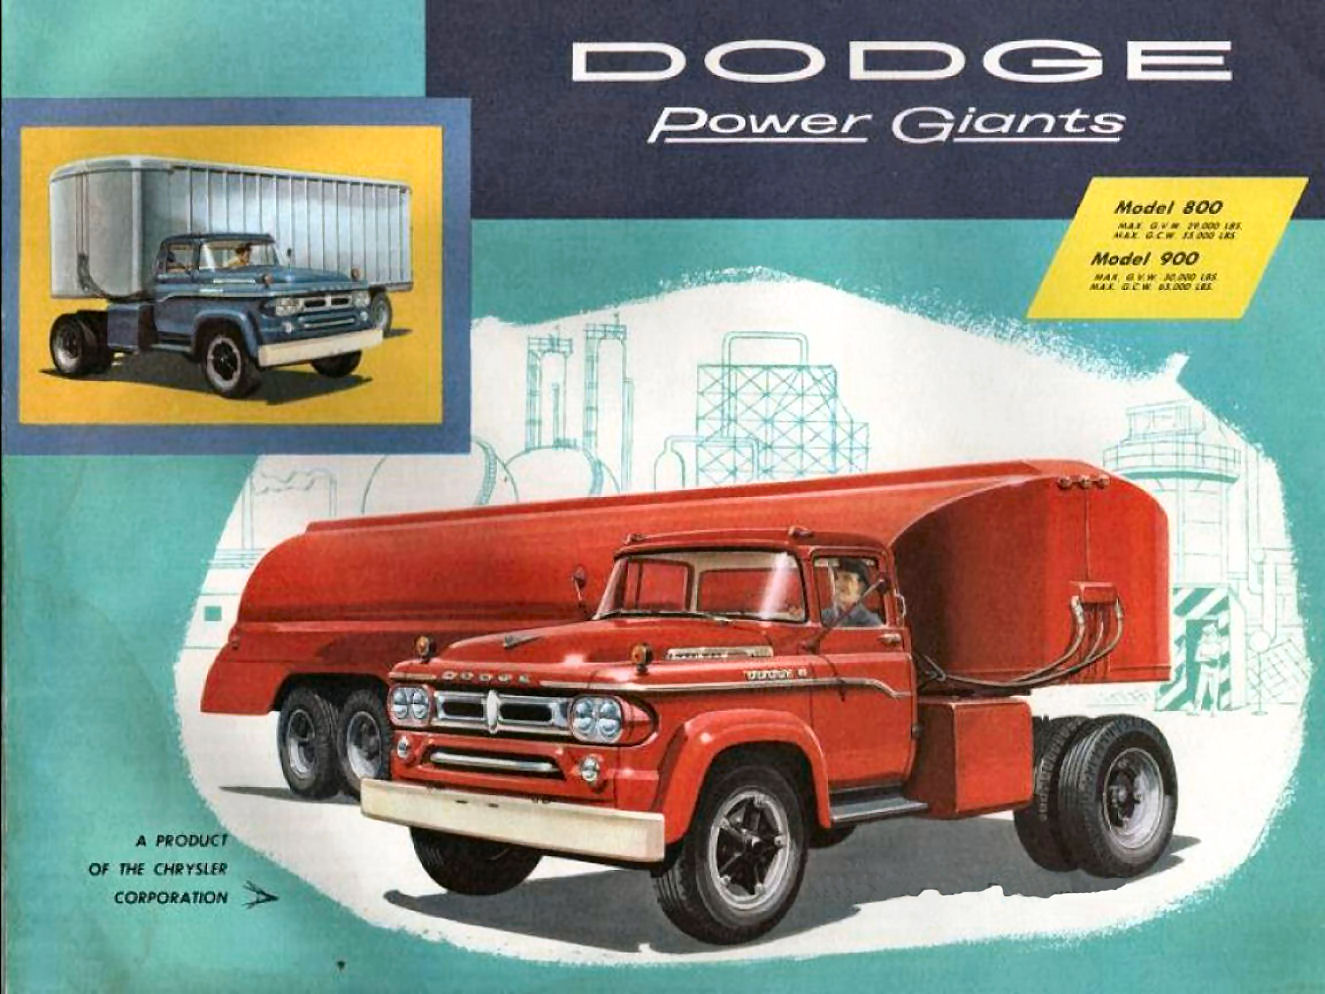 1958_Dodge_Model_800-900-01